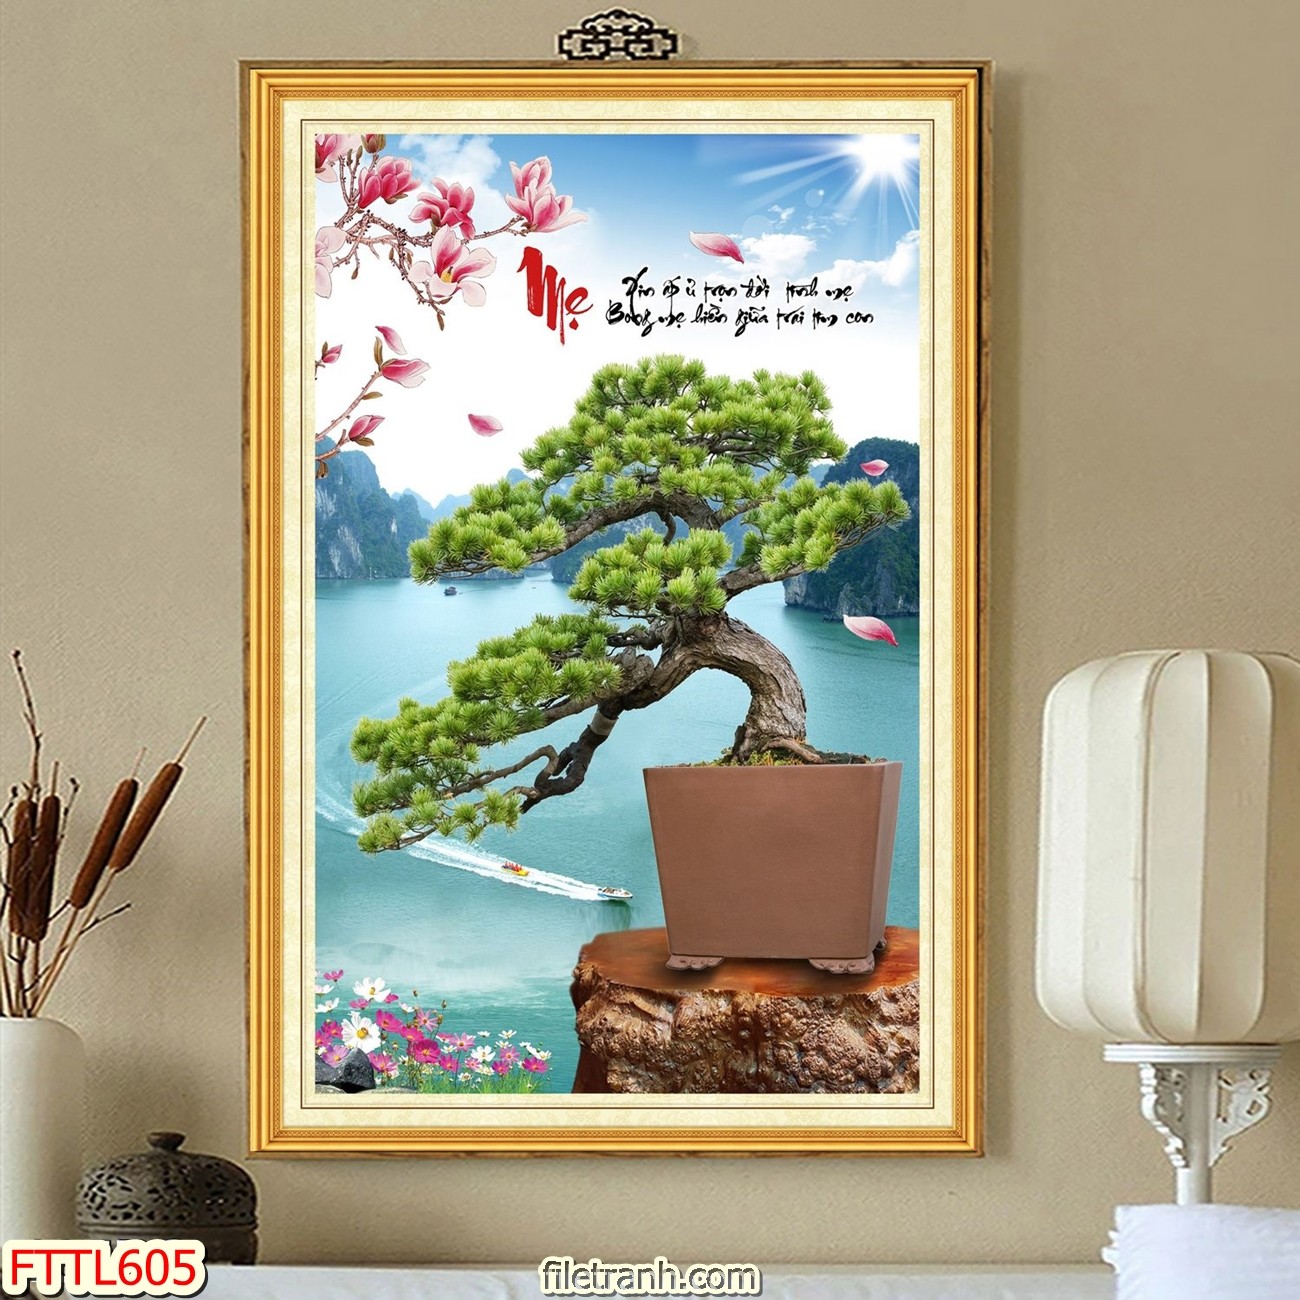 https://filetranh.com/file-tranh-chau-mai-bonsai/file-tranh-chau-mai-bonsai-fttl605.html